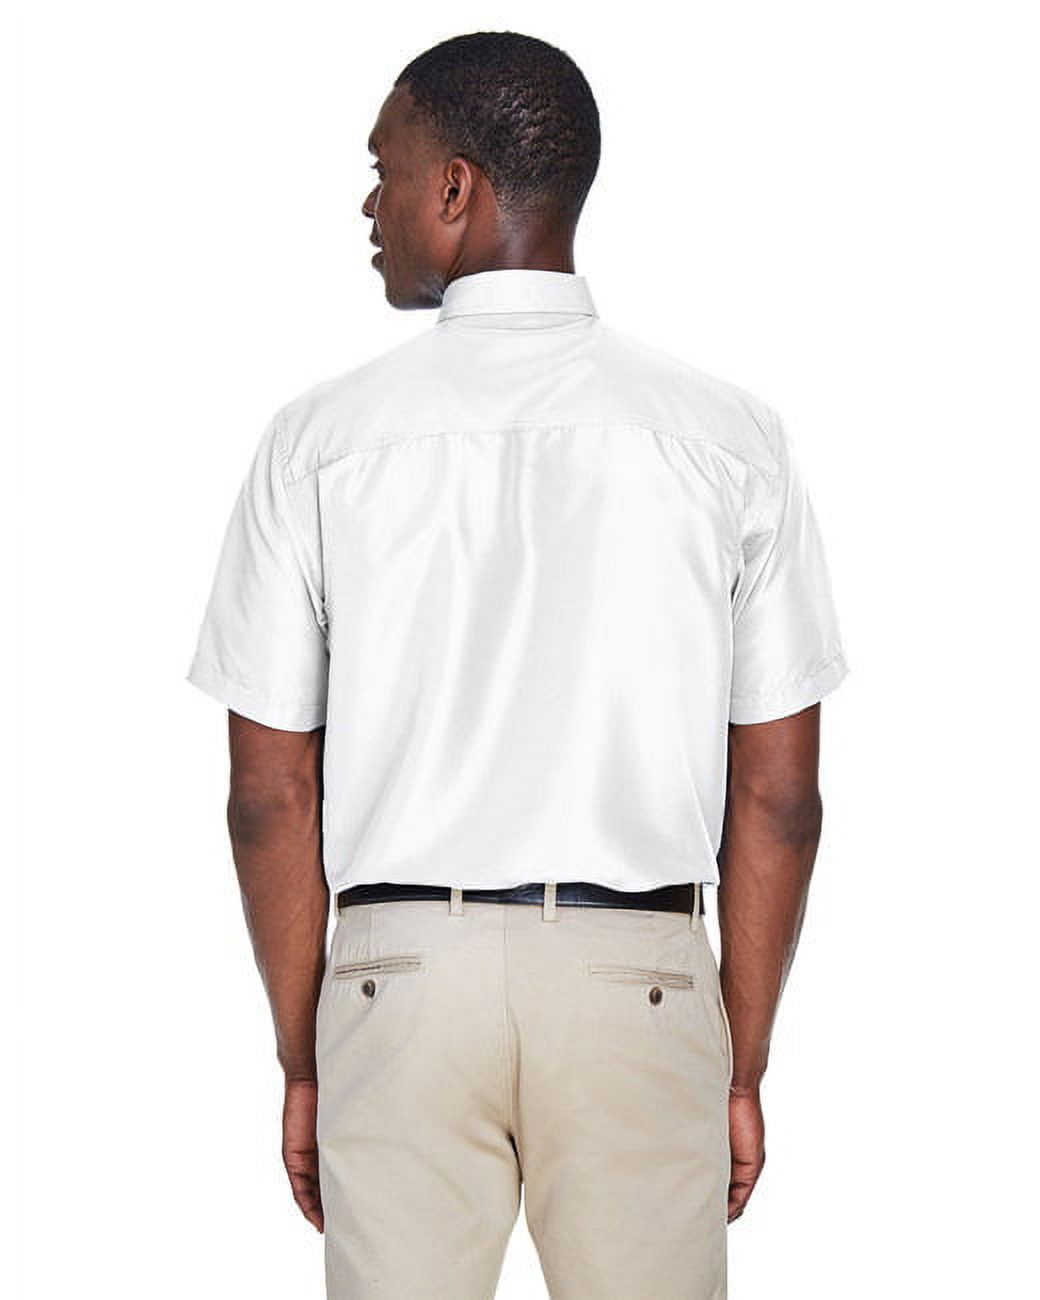 Harriton M580 Men's Key West Short-Sleeve Performance Staff Shirt - image 2 of 3